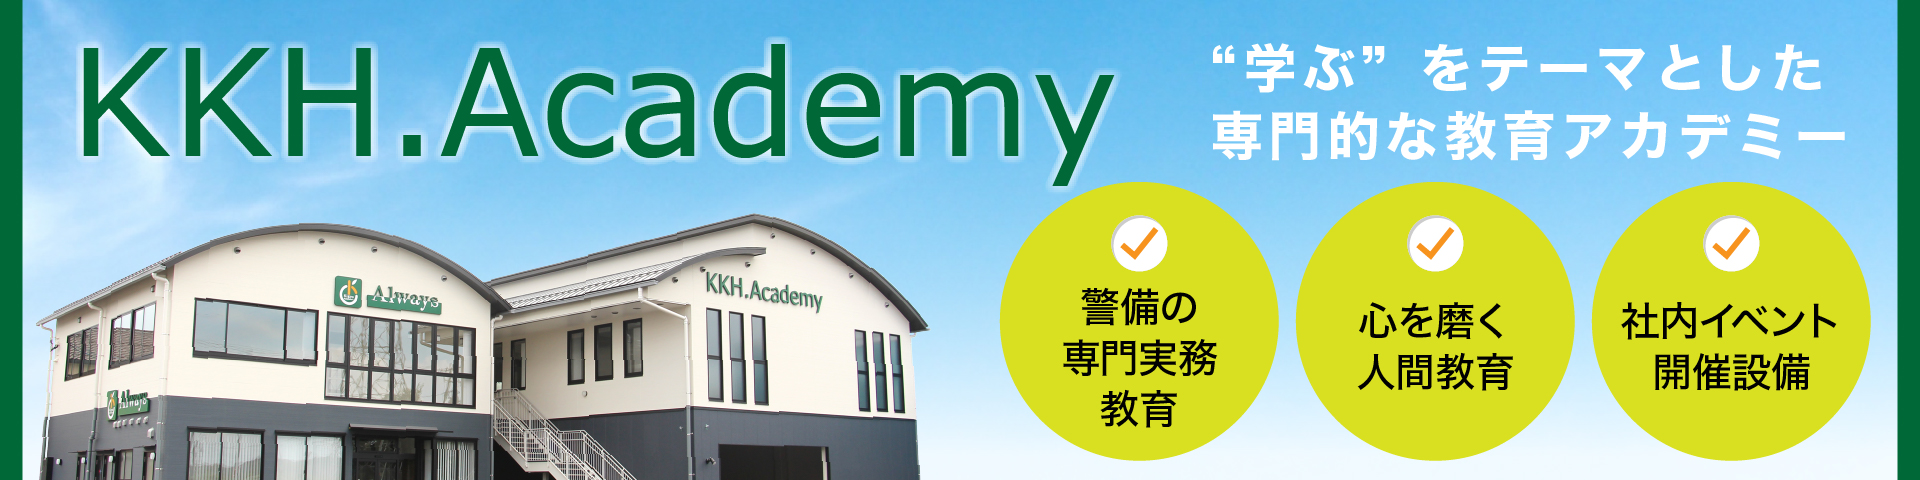 KKH.Academy